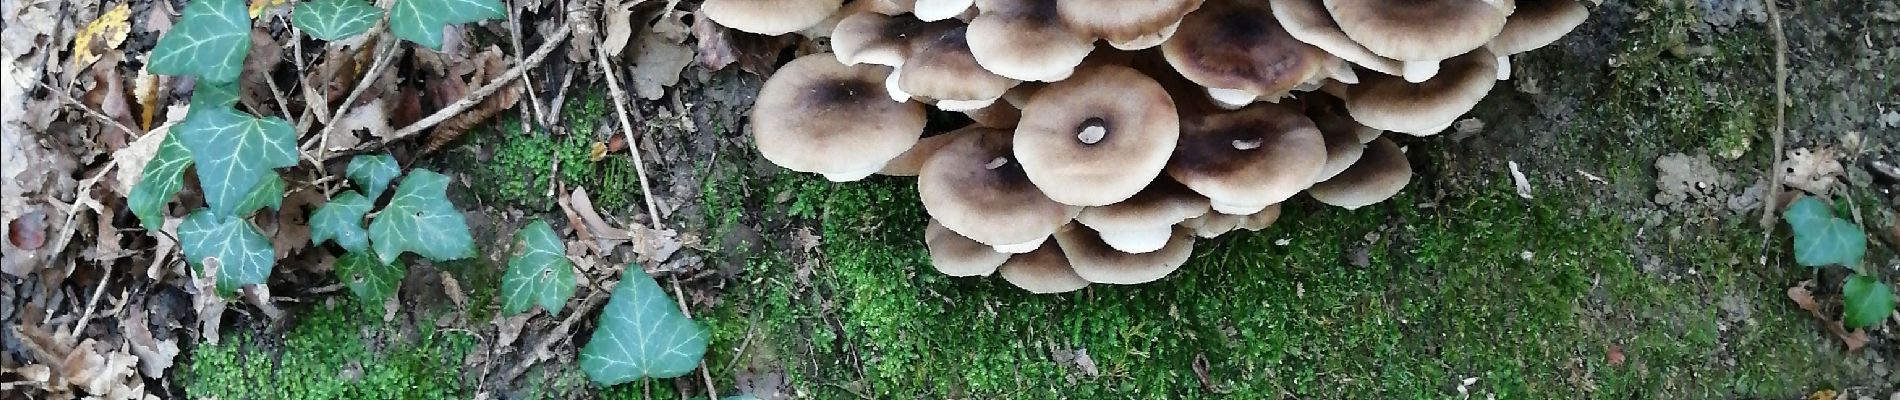 Randonnée Marche Chênex - Chenex champignons - Photo